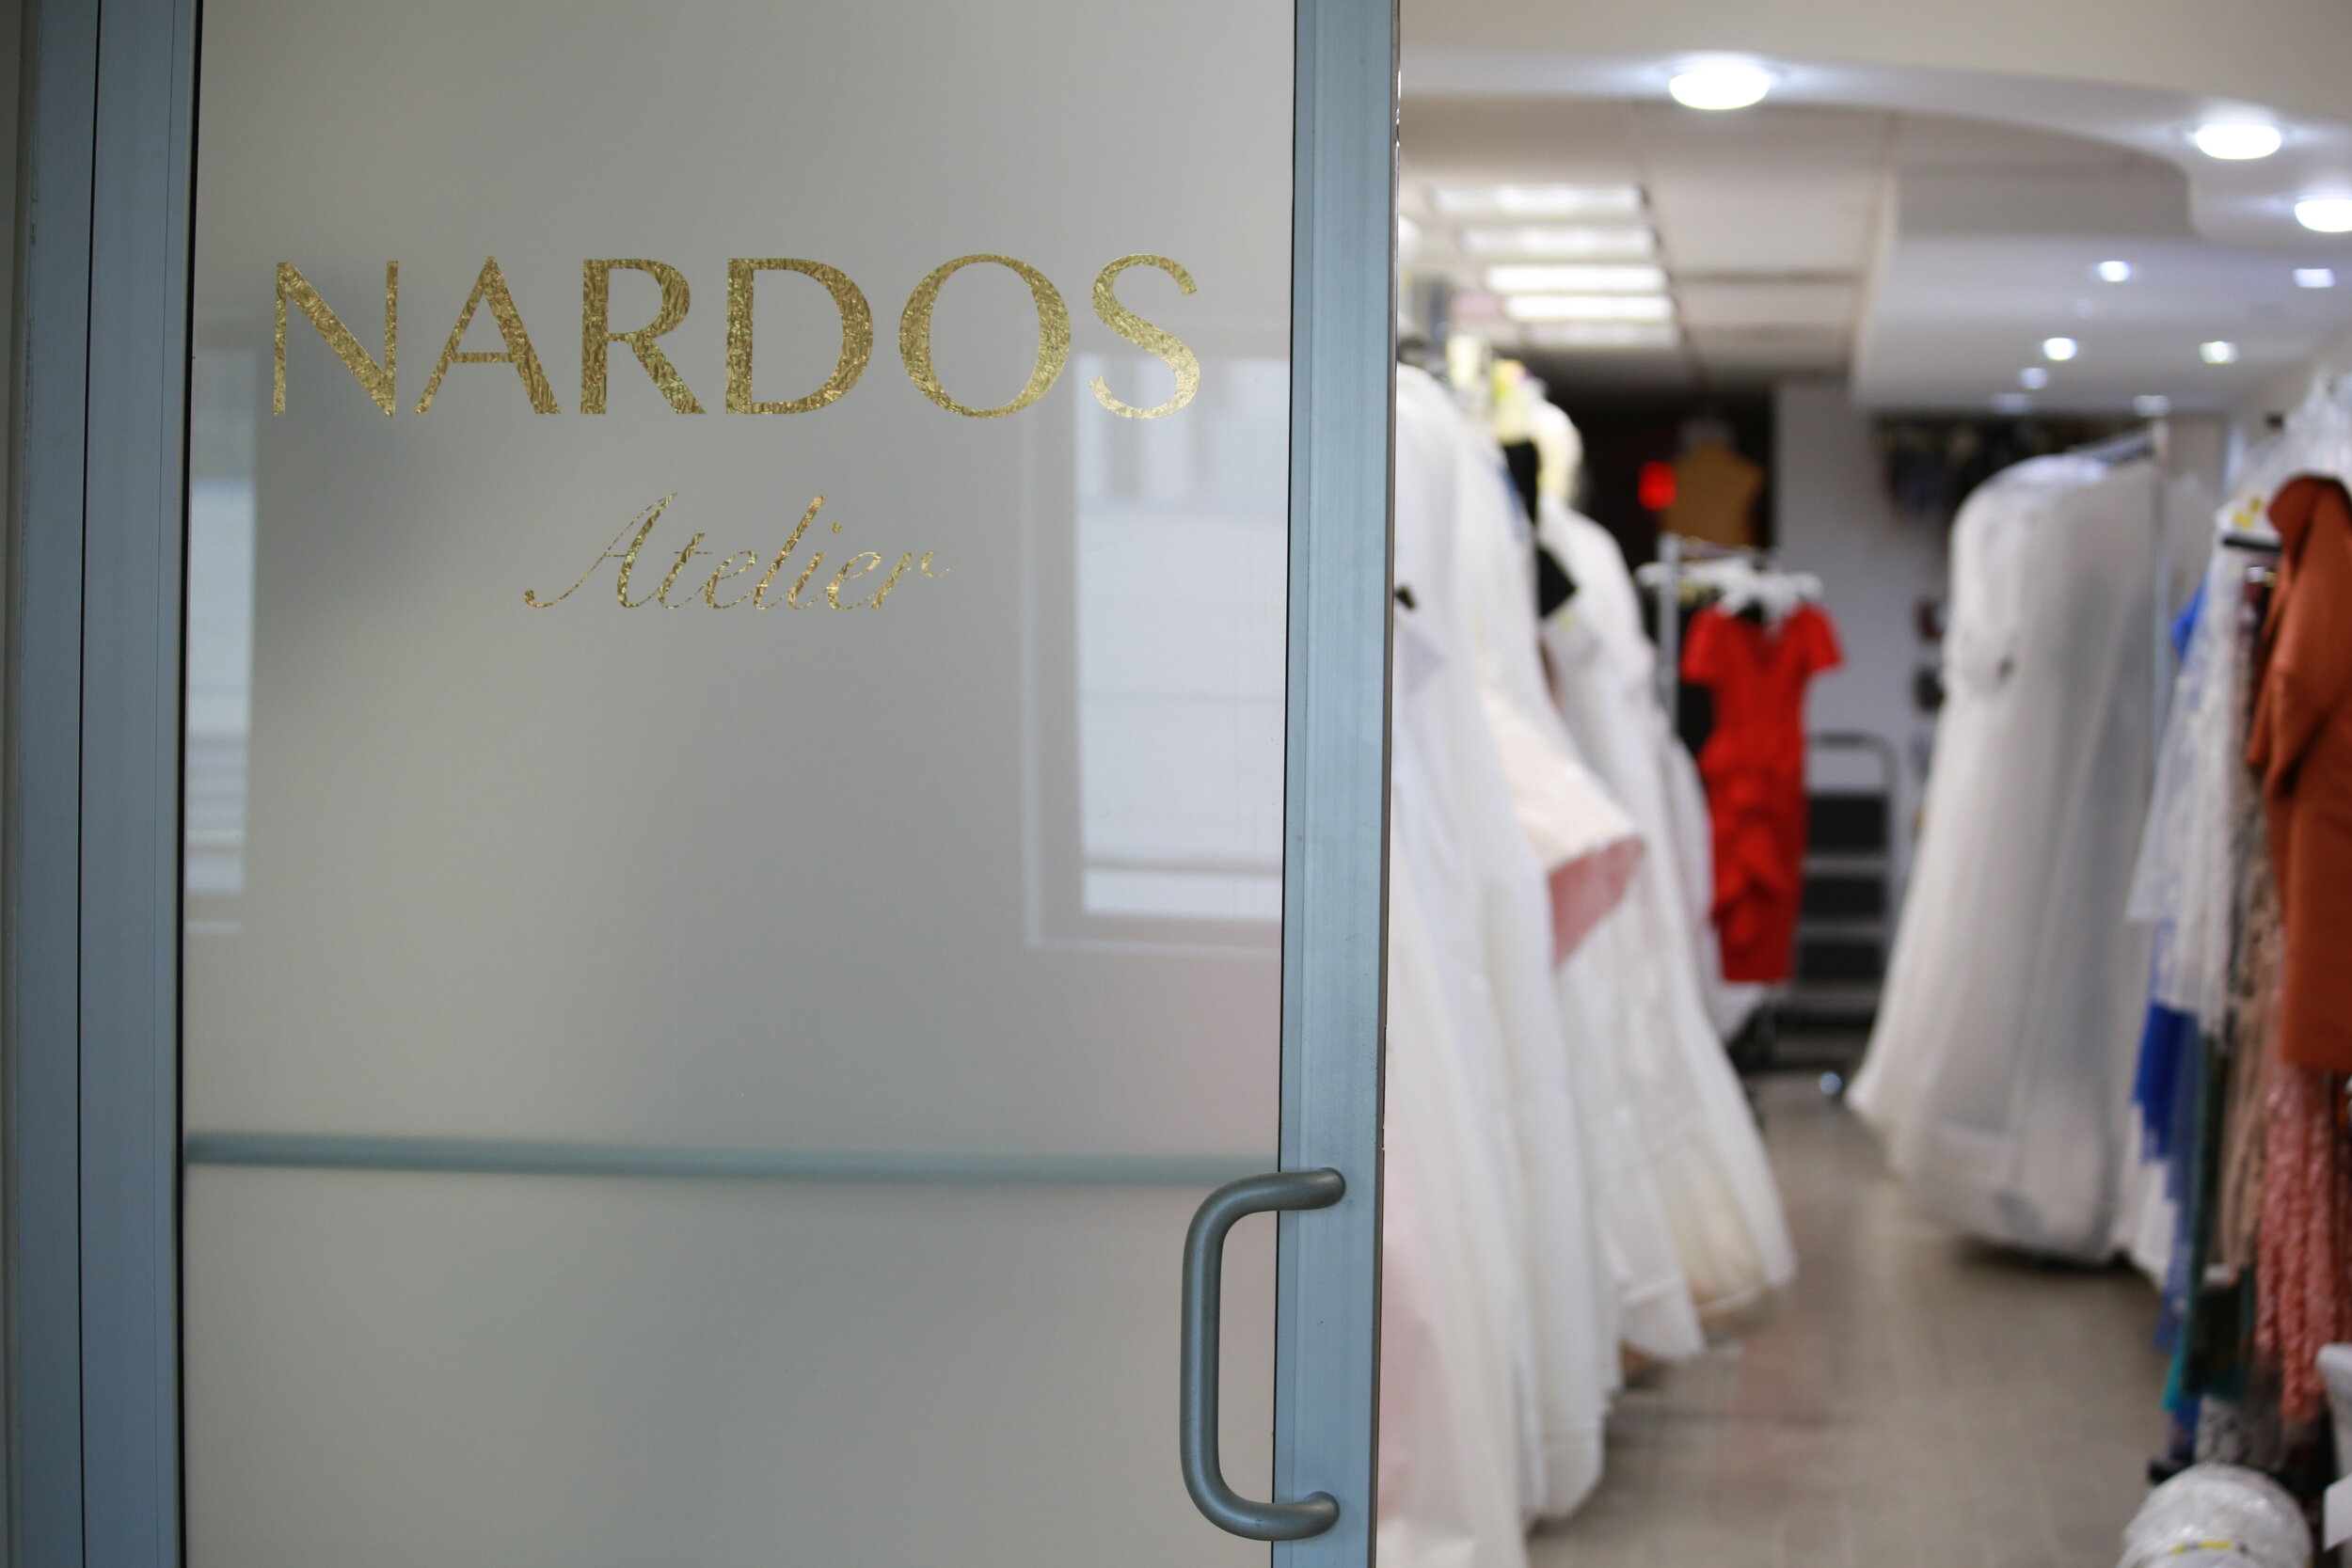 Nardos Couture at Preston Center location.